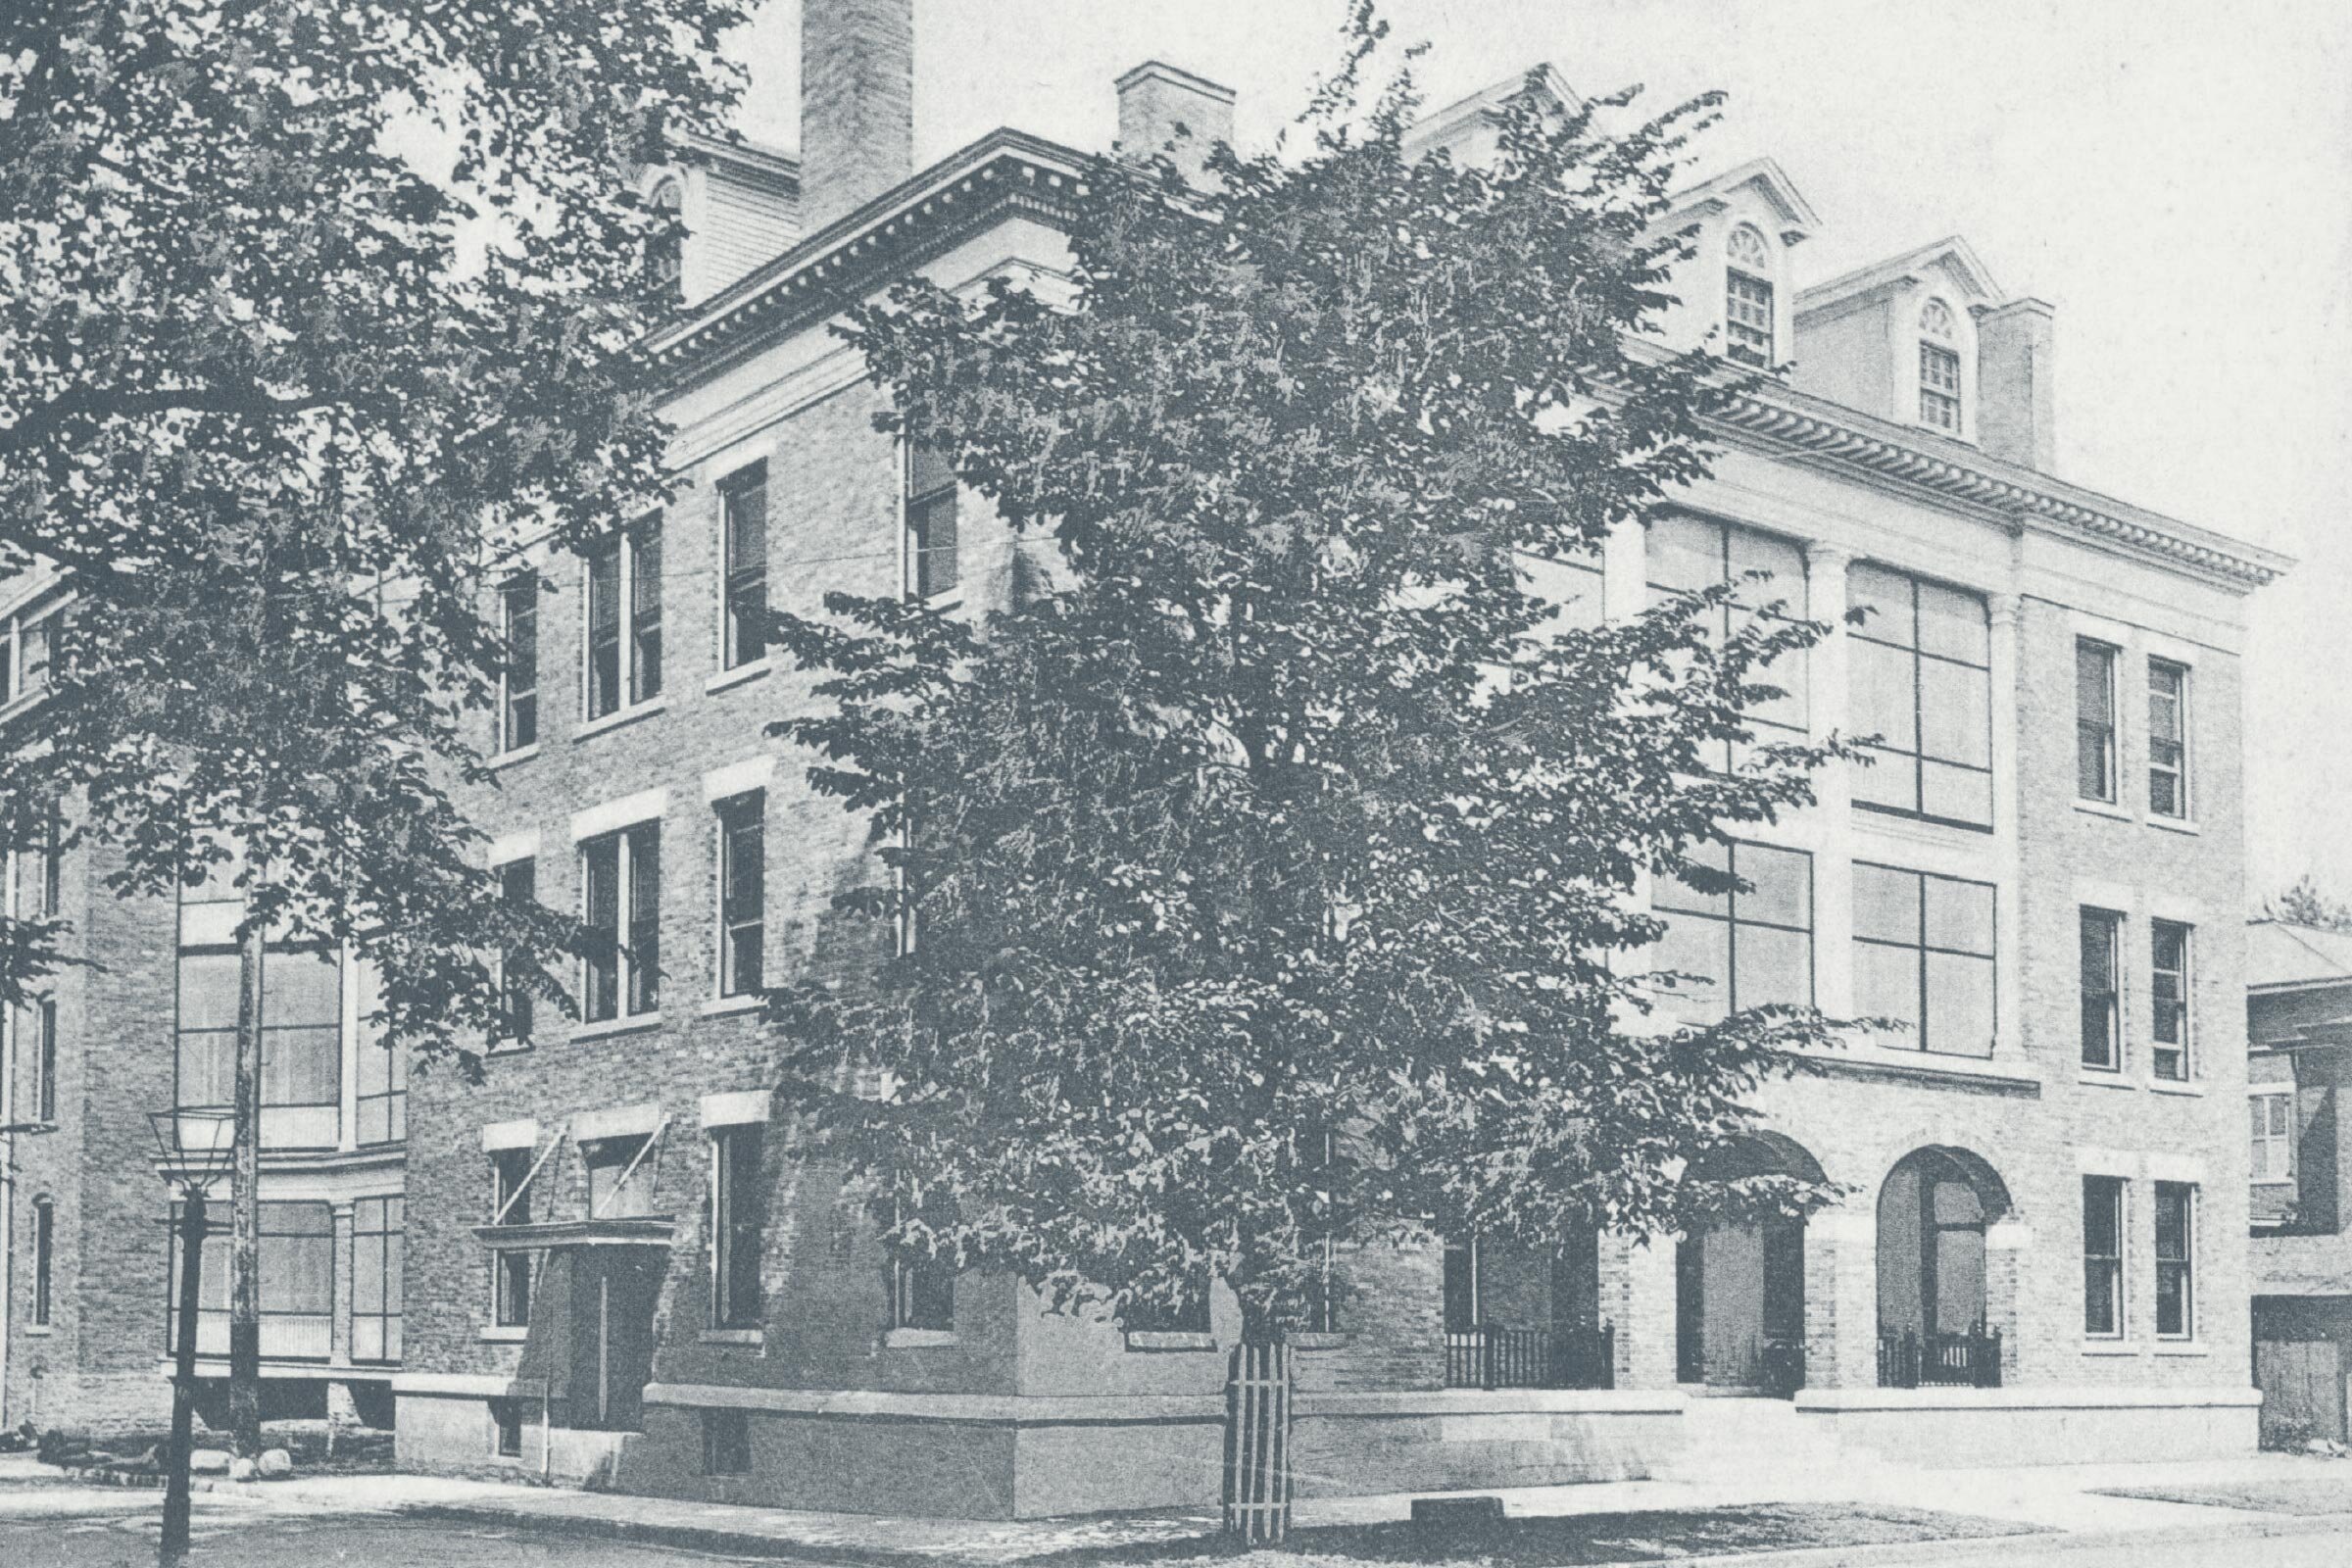 Grant Hospital, circa 1900. From the Reeb, Deibel, Ruffing Columbus Postcard Collection at Columbus Metropolitan Library.